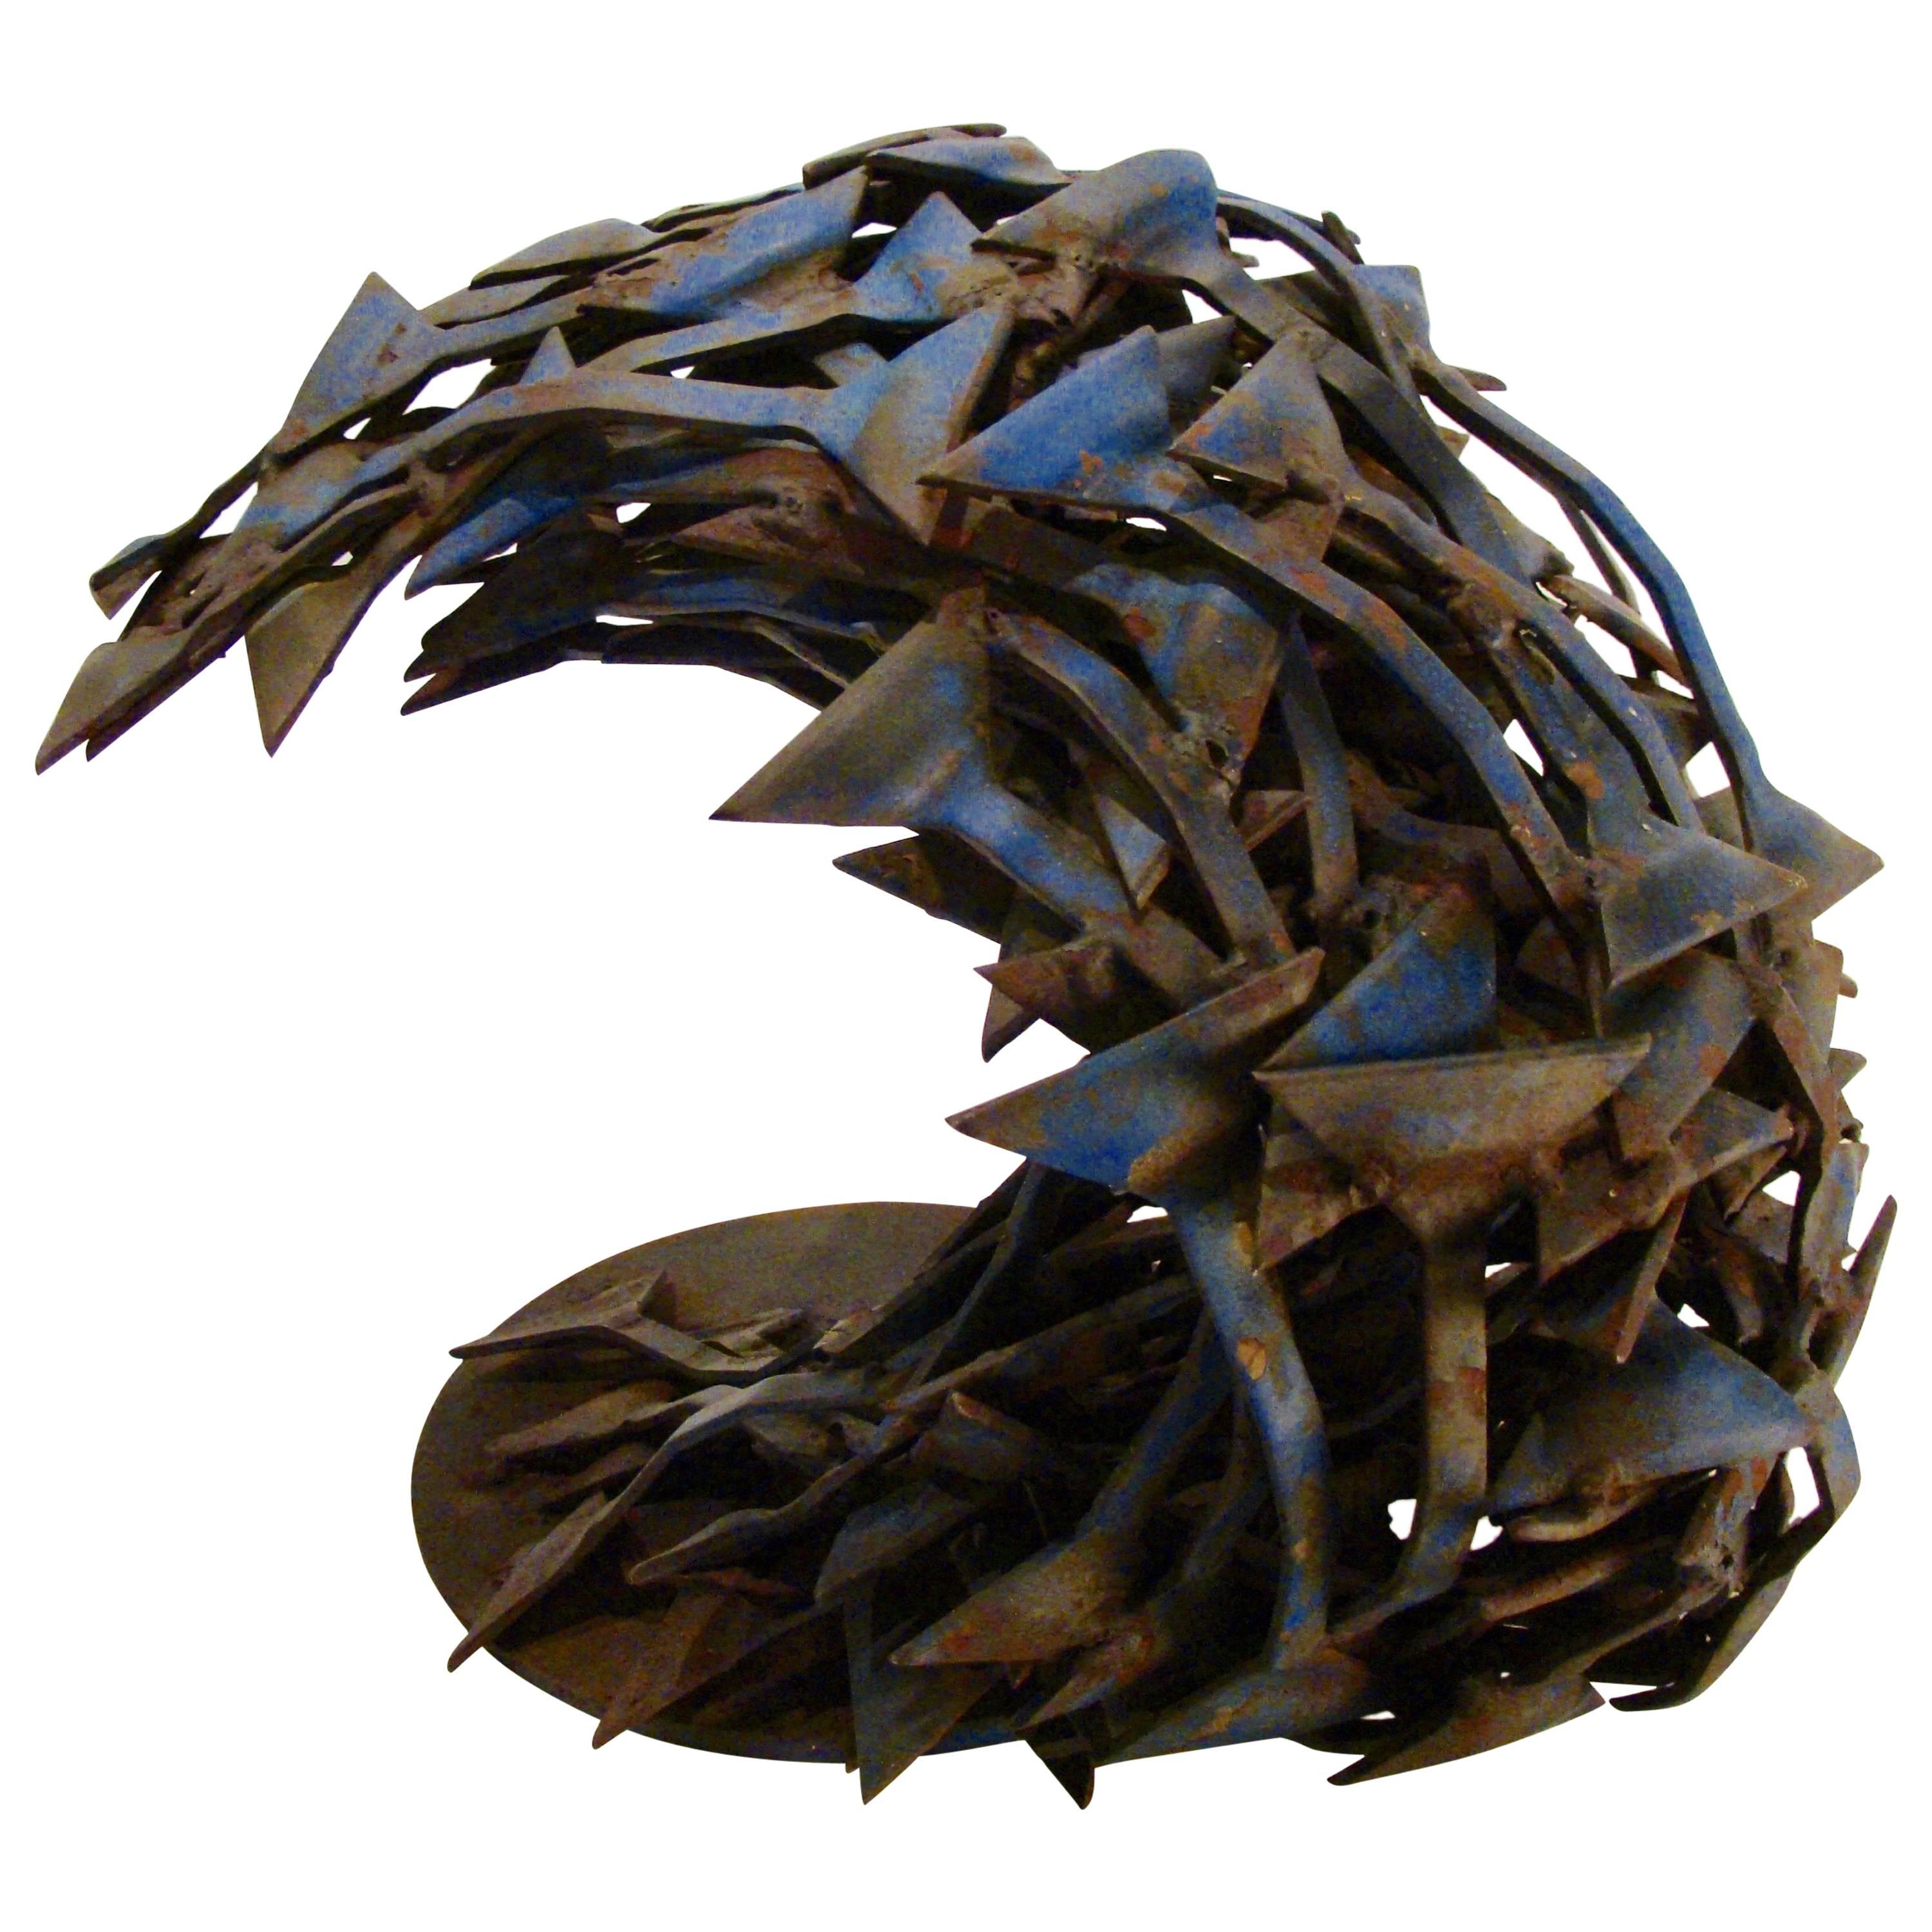 Brutalist Modernist Abstract "Sea Urchin" Sculpture For Sale